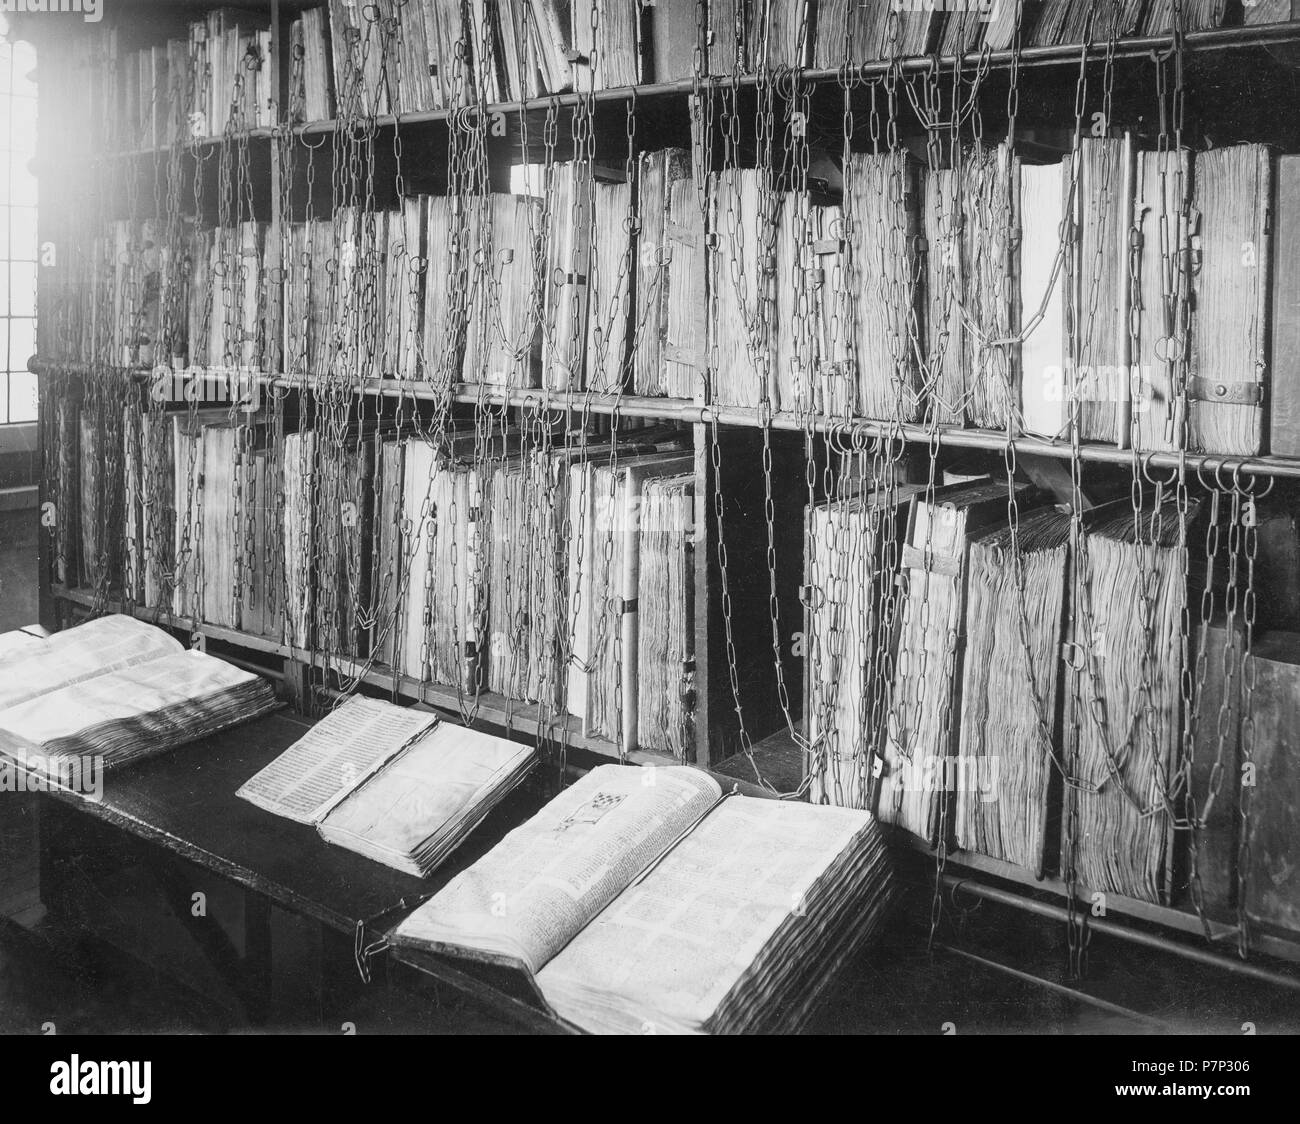 Bibliothek der Kathedrale in Hereford, Inghilterra./Ca. 1930 Bibliothek der Kathedrale in Hereford, Inghilterra Foto Stock